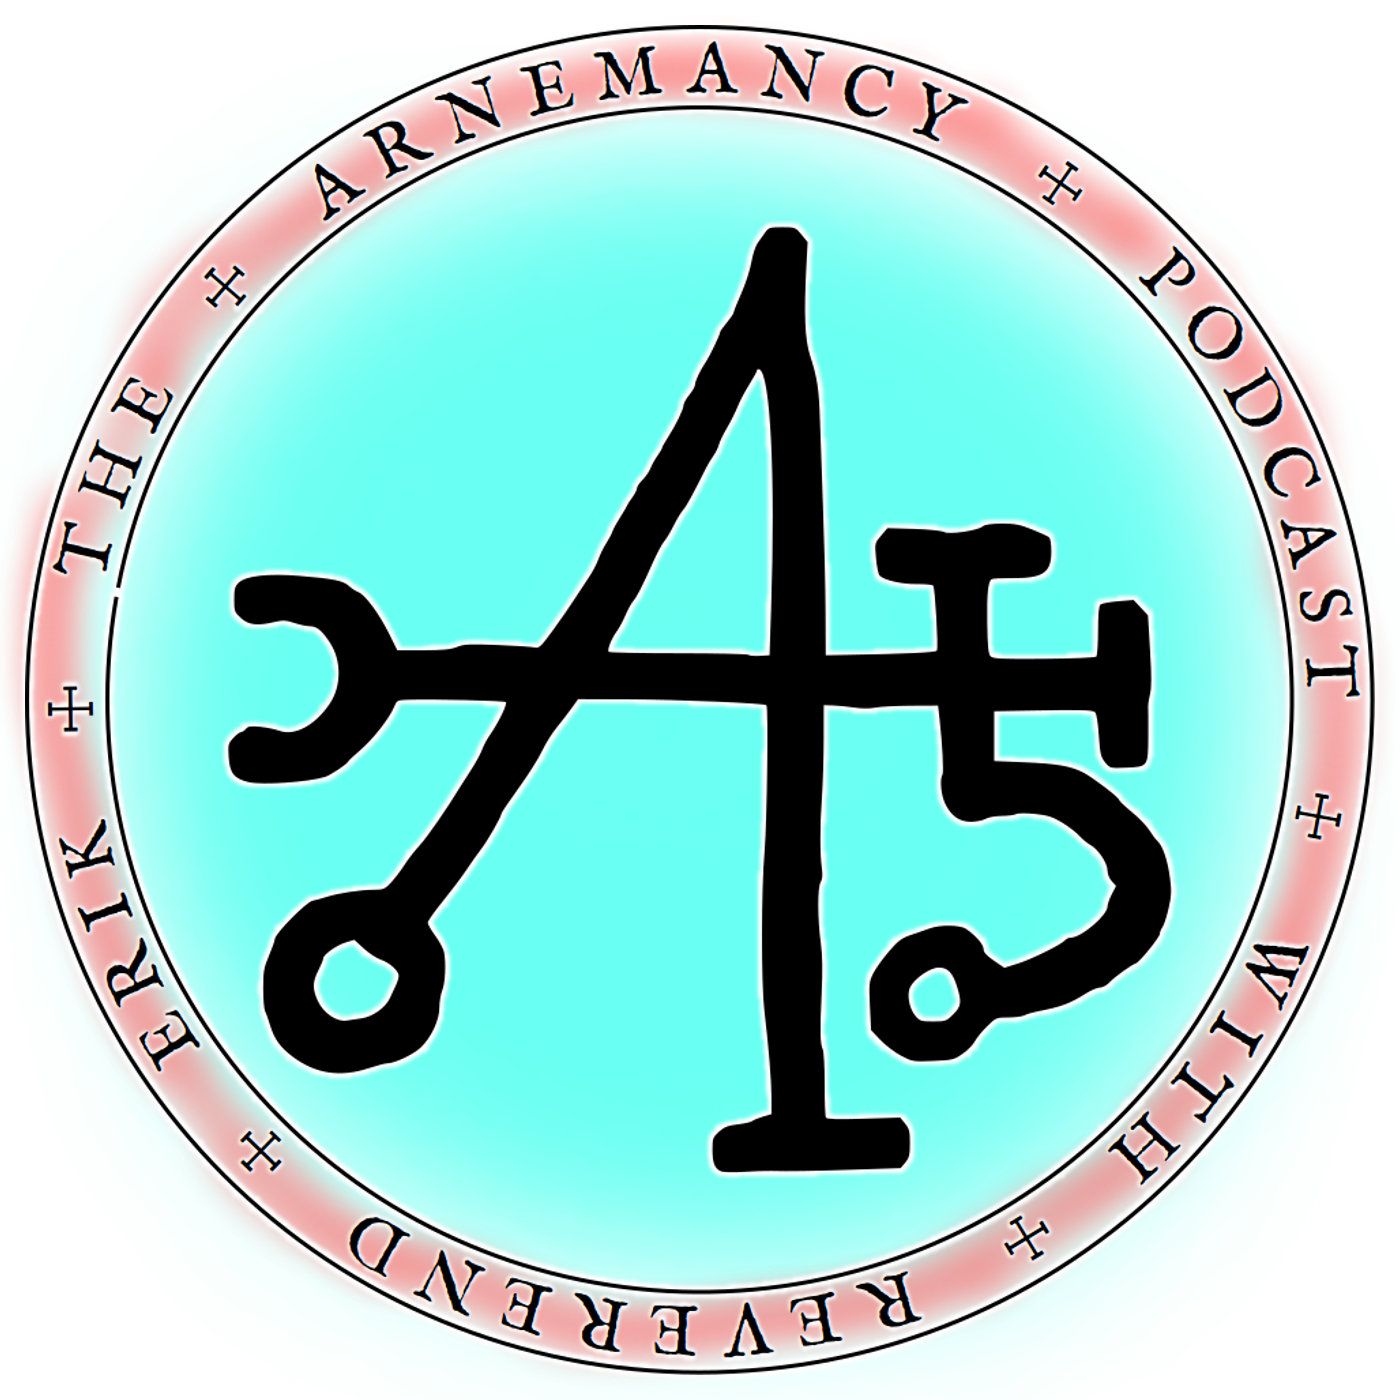 The Arnemancy Podcast